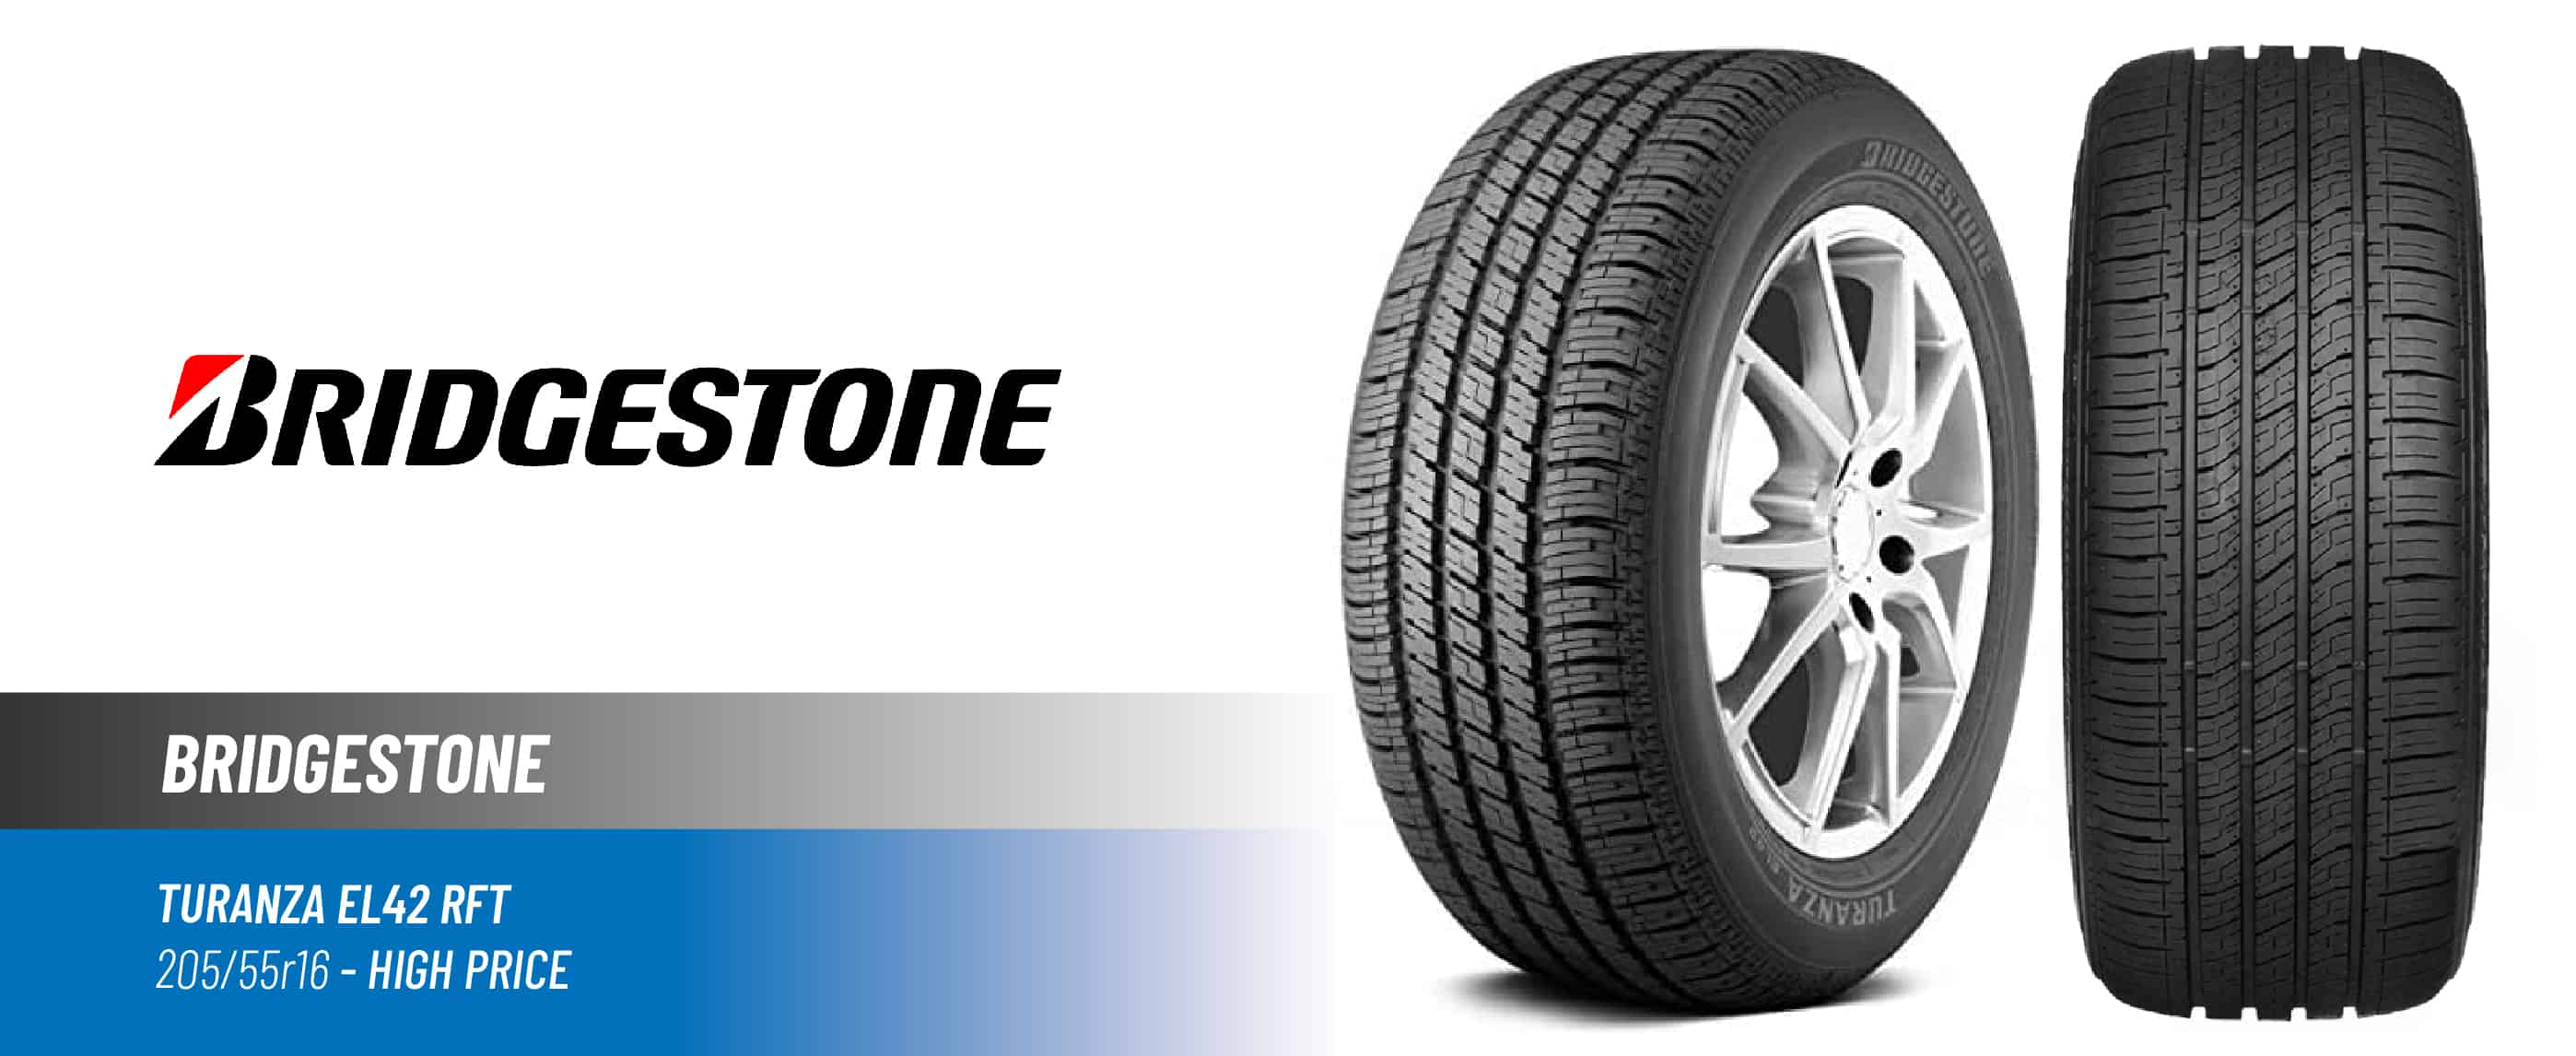 Top#3 High Price: Bridgestone Turanza EL42 RFT –best 205/55r16